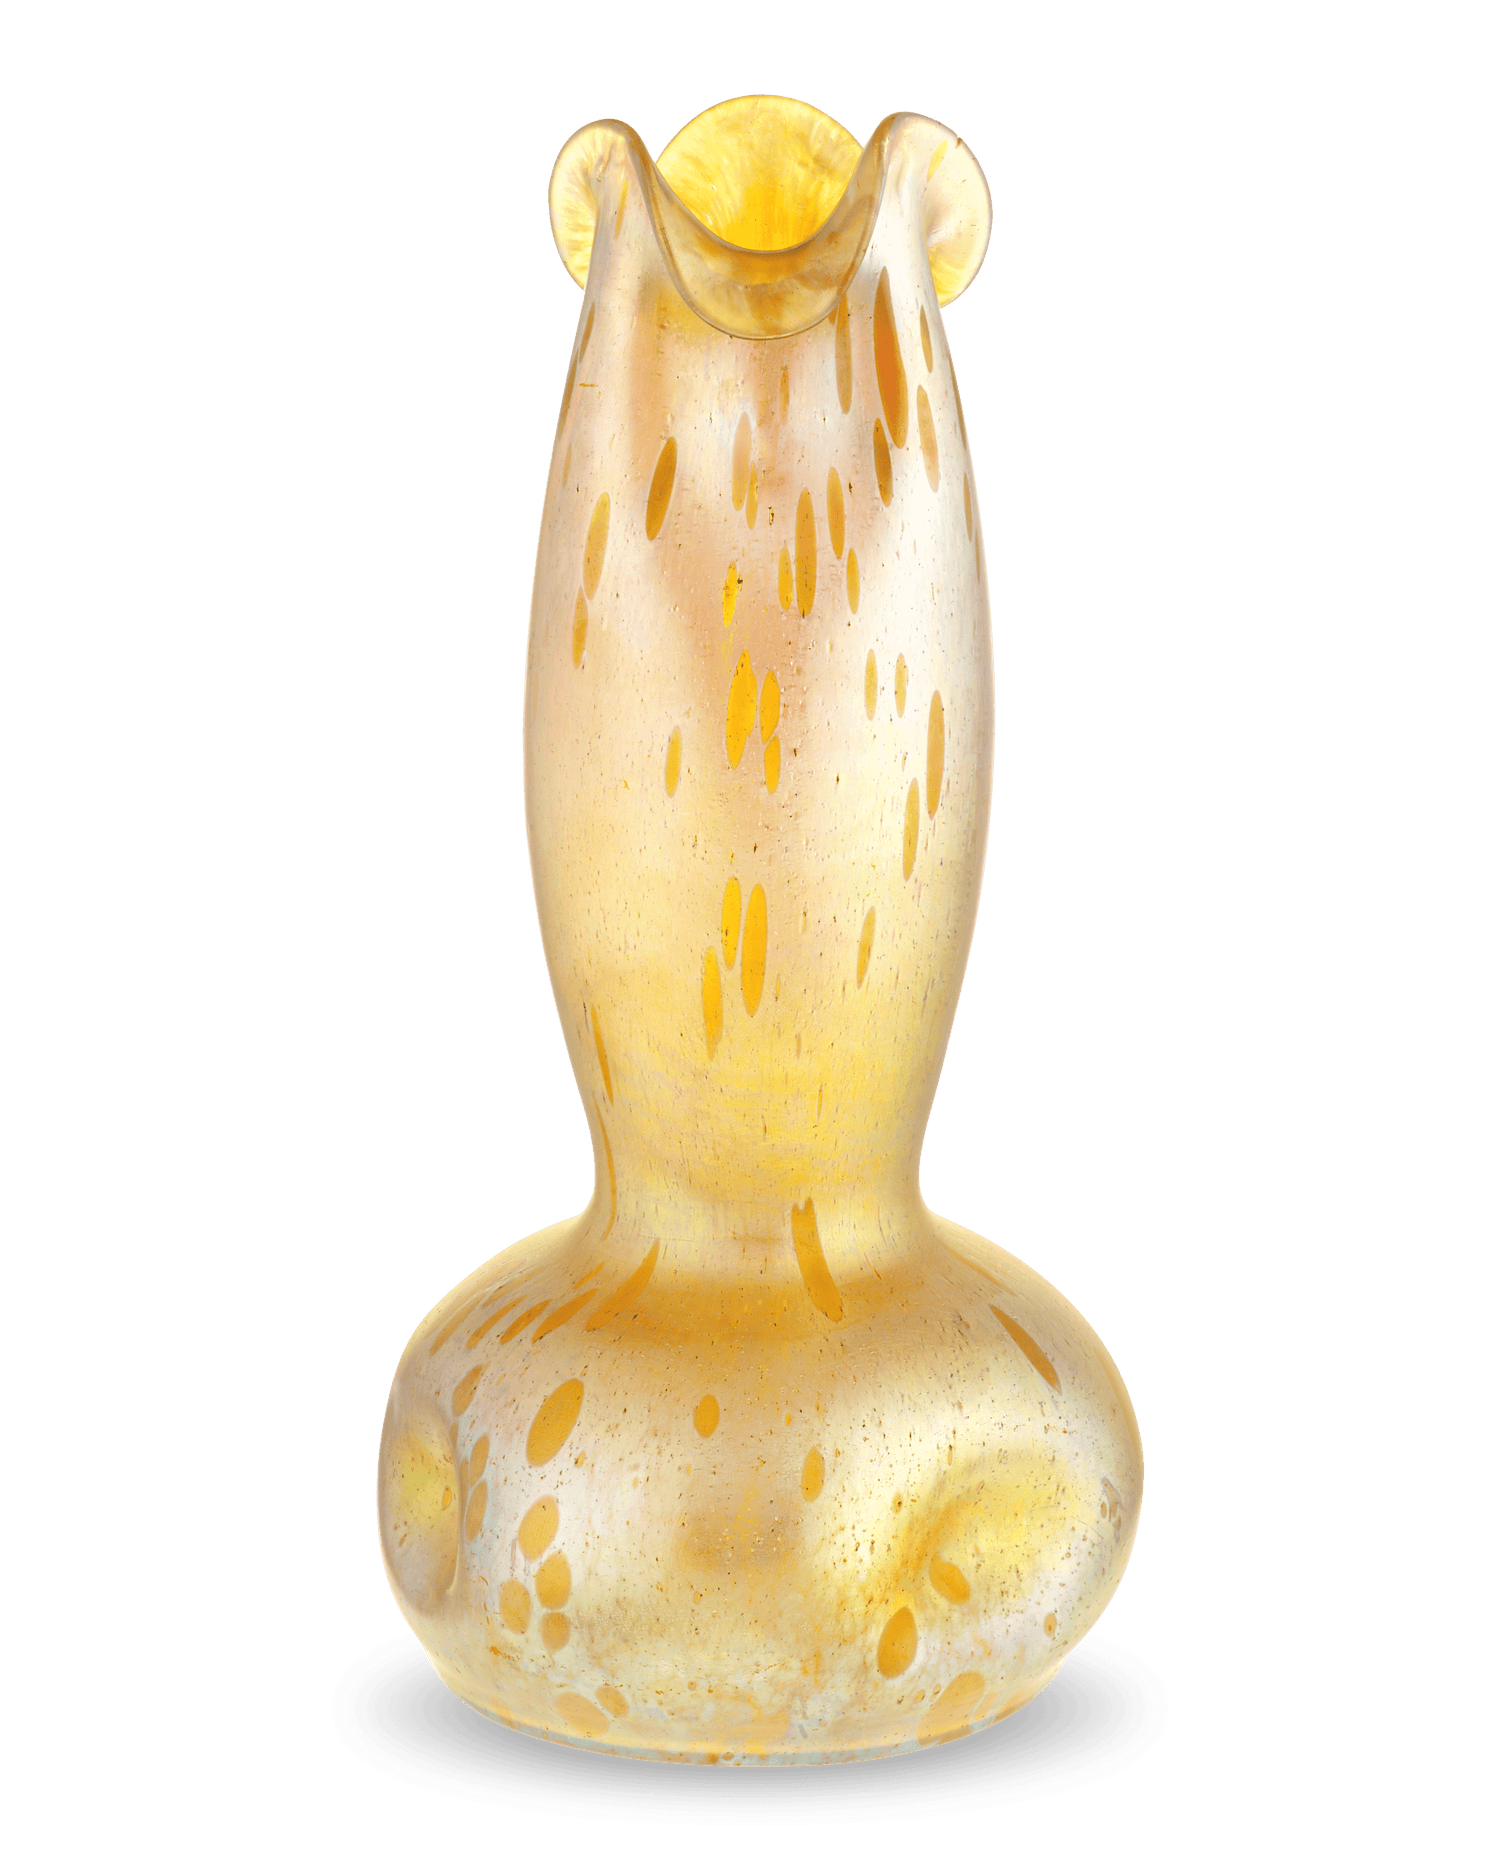 Loetz Iridescent Glass Vase